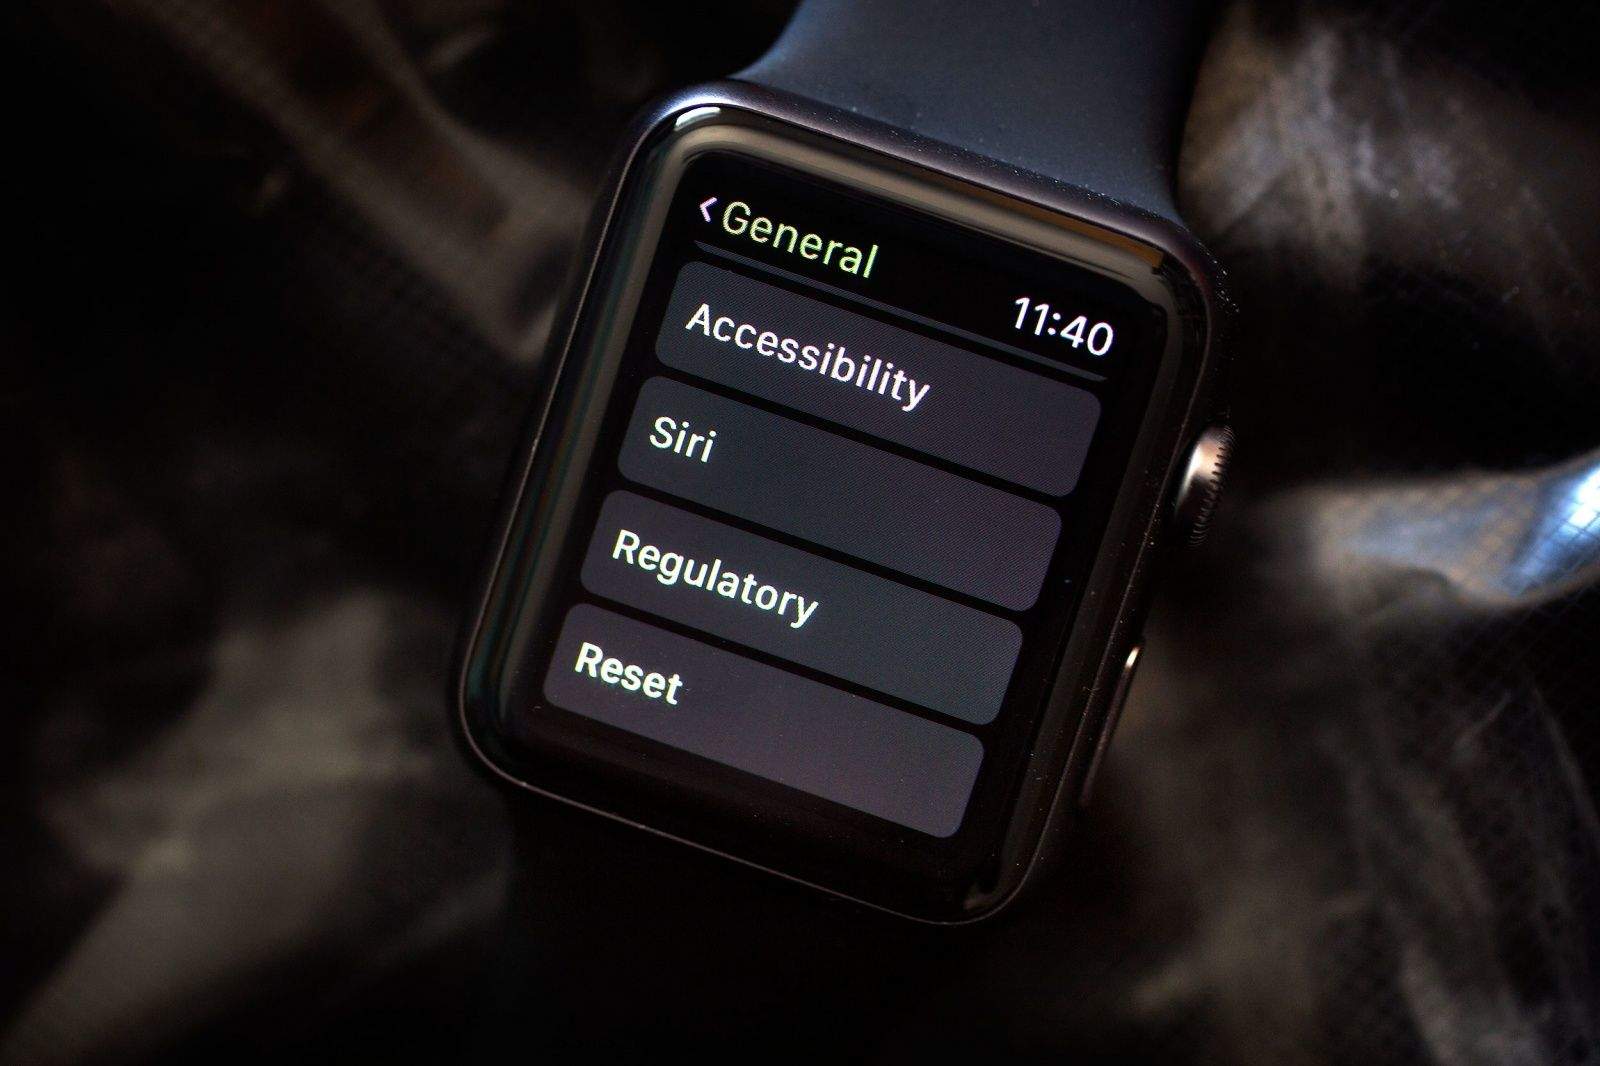 Apple Watch reset